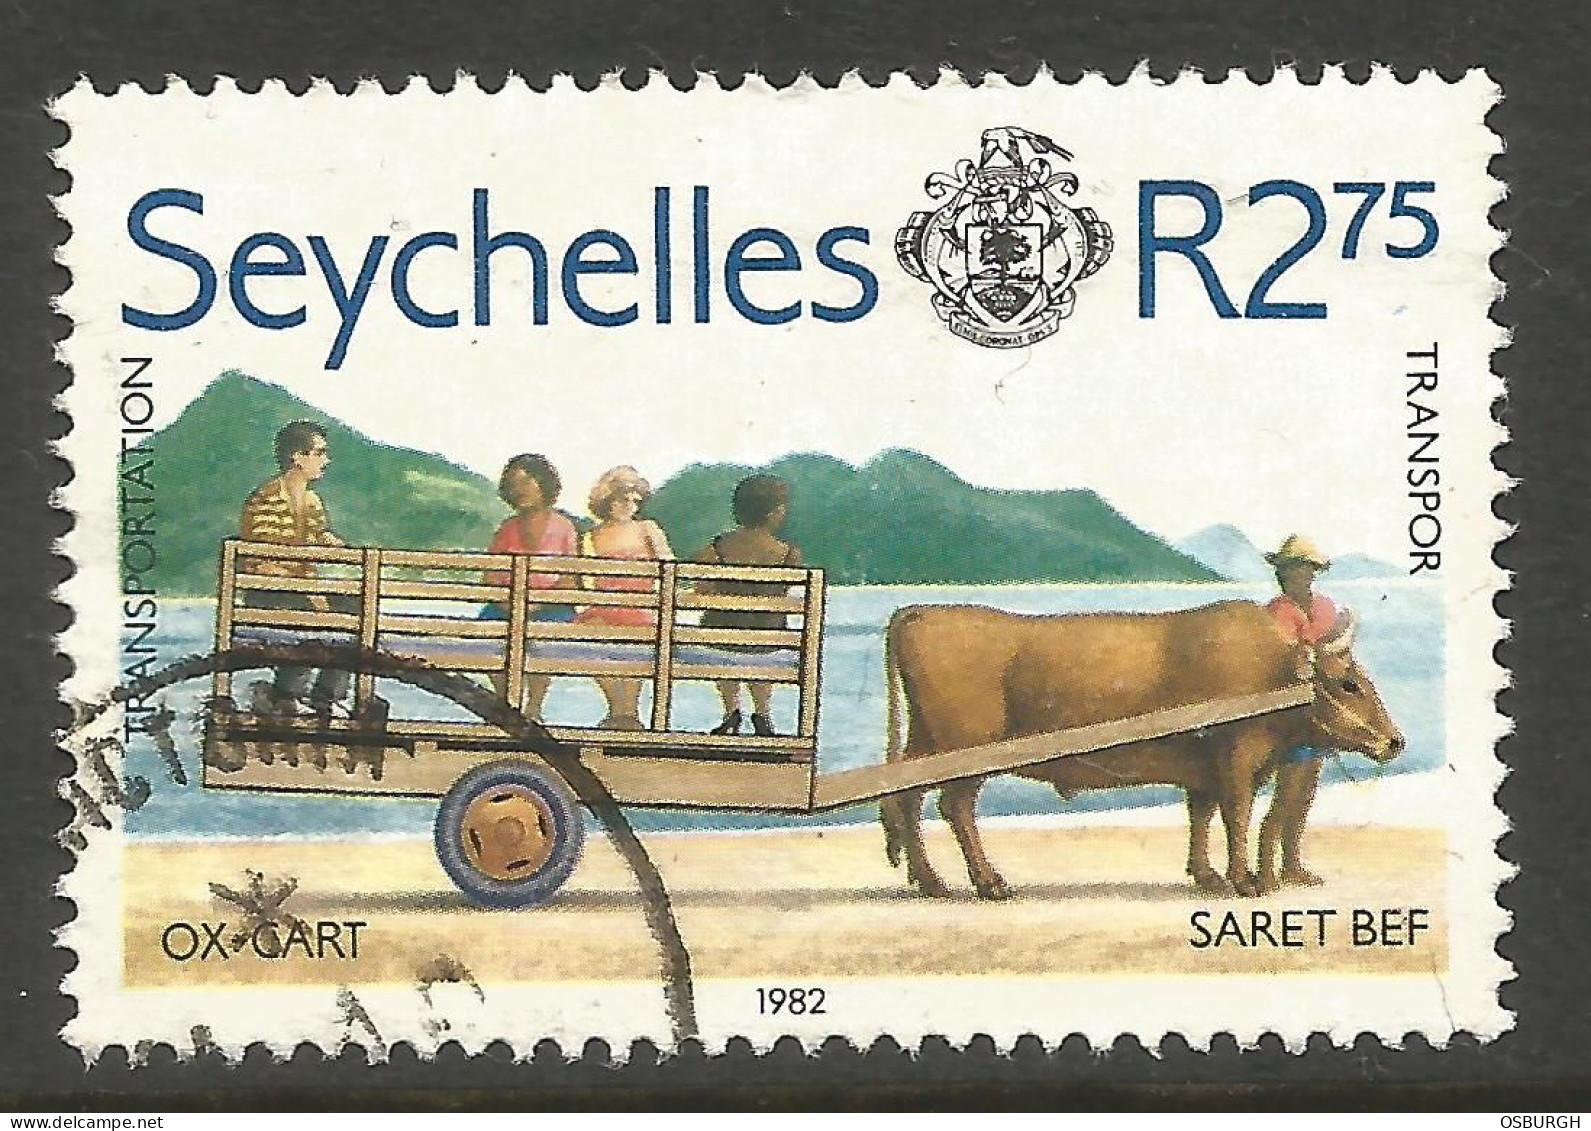 SEYCHELLES. 1982. R2.75 OXCART USED. - Seychellen (1976-...)